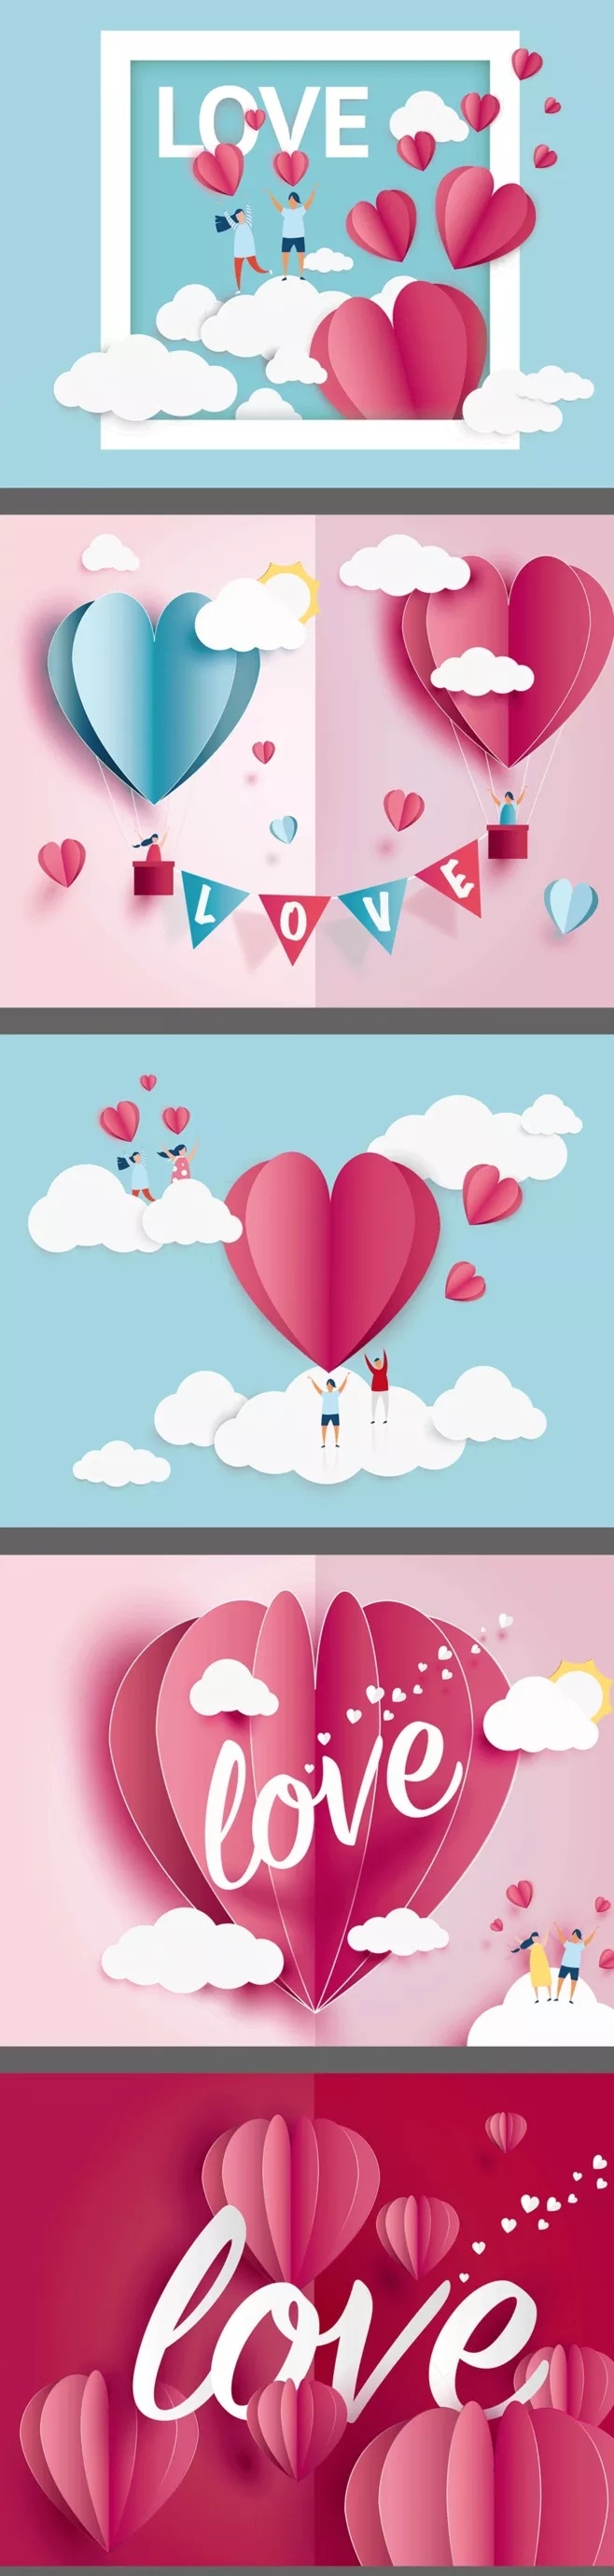 c4d 立体 情人节 电商 促销 海报 love 金色 图案 粉红色气球 小型建筑物 礼物盒 金色展台 活动 爱 开心 幸福 美满